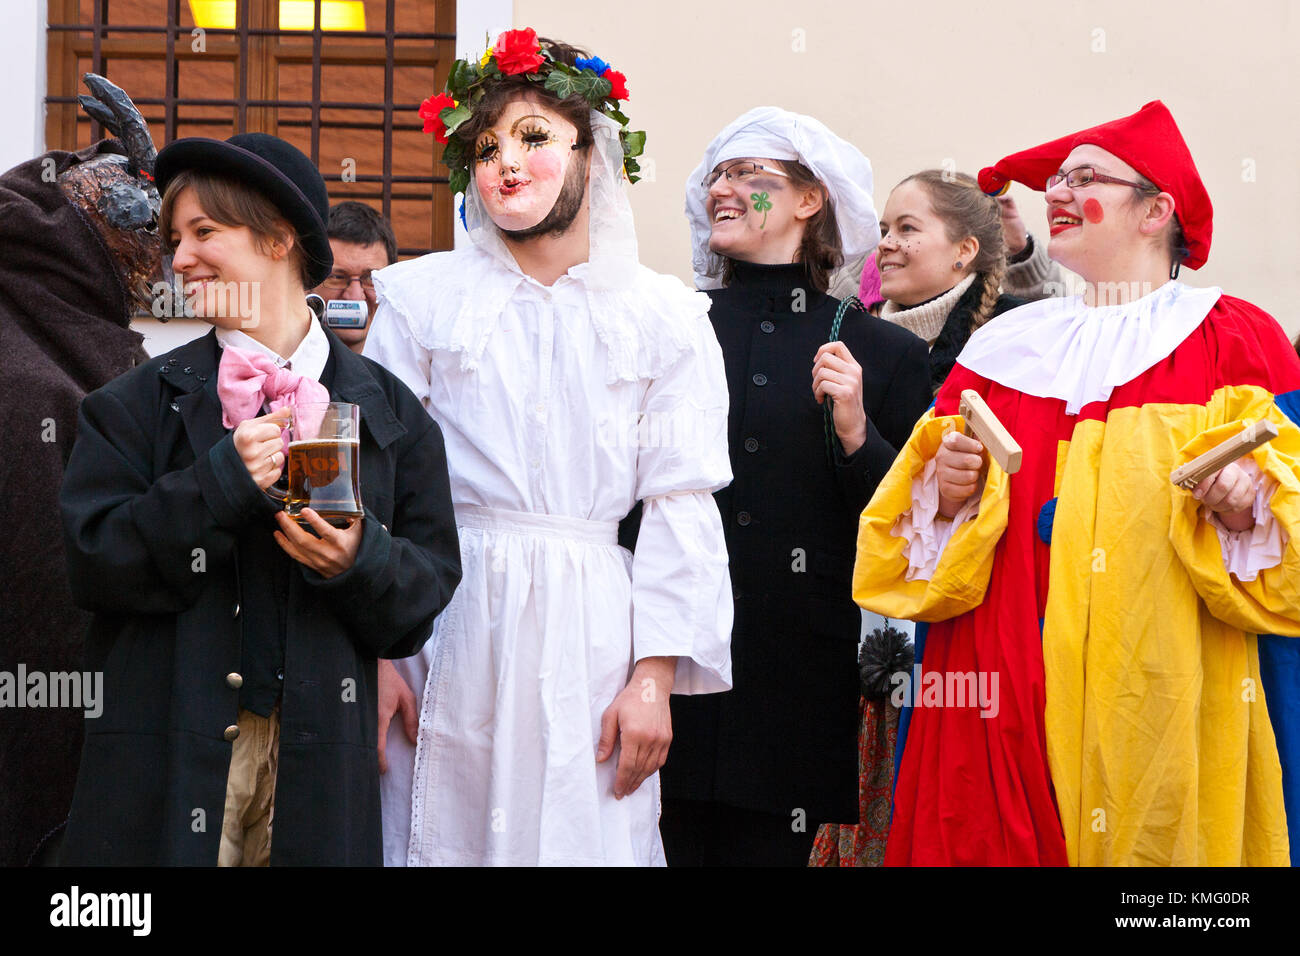 Masopust - statek Toulcův Dvůr, Hostivař, Praha, Ceska republika  / Carnival - traditional czech ceremonial Shrovetide door-to-door procession Stock Photo